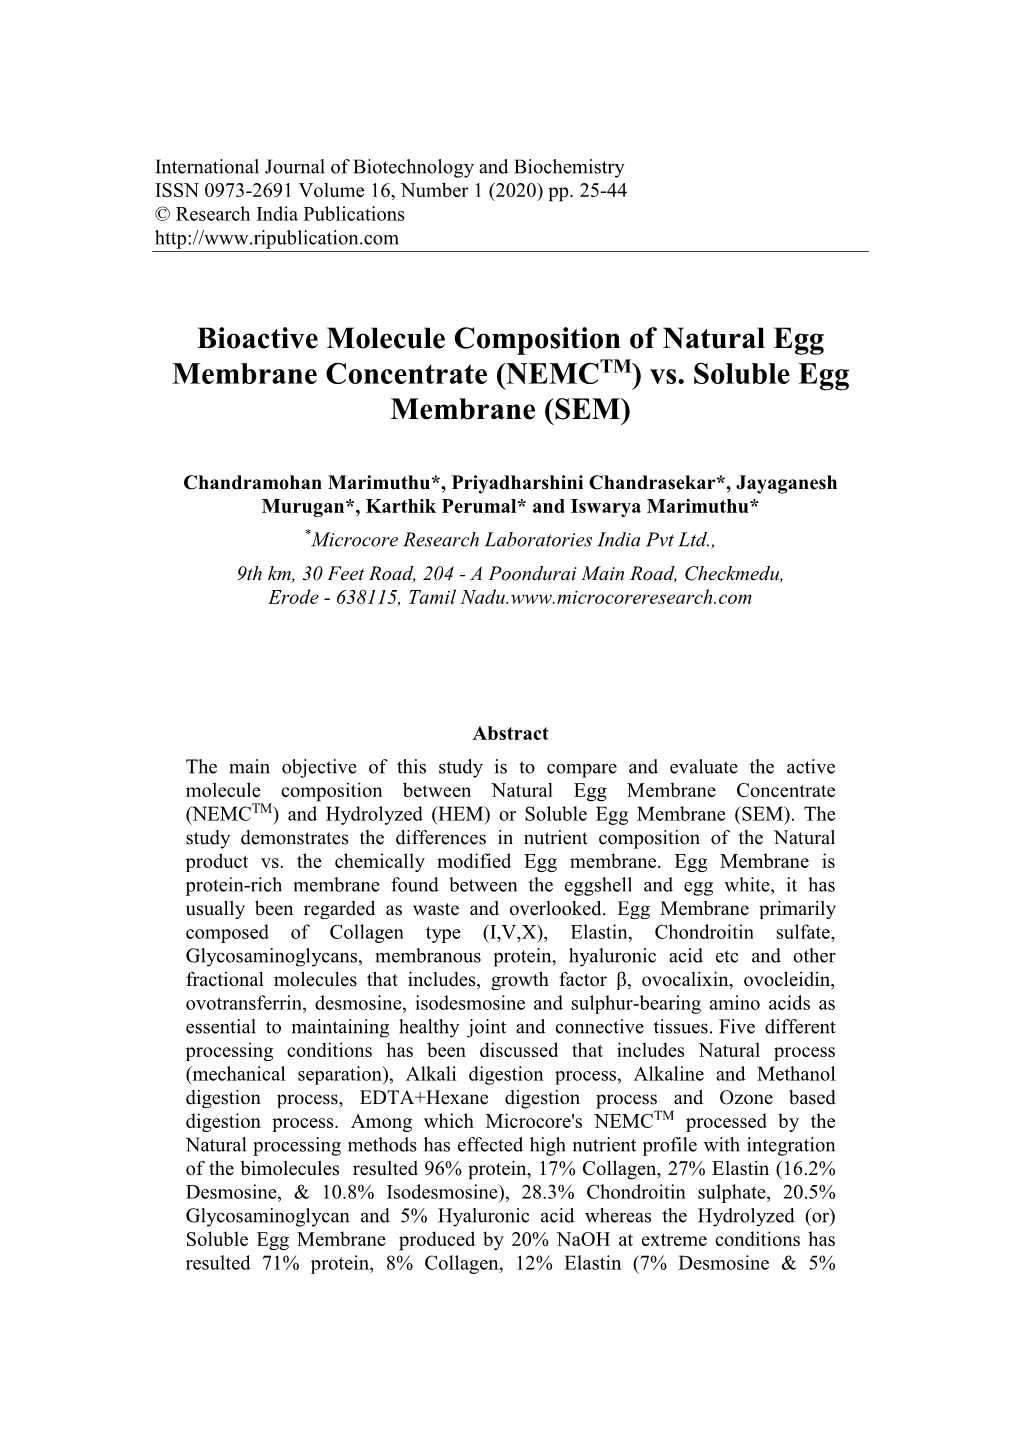 Bioactive Molecule Composition of Natural Egg Membrane Concentrate (NEMCTM) Vs